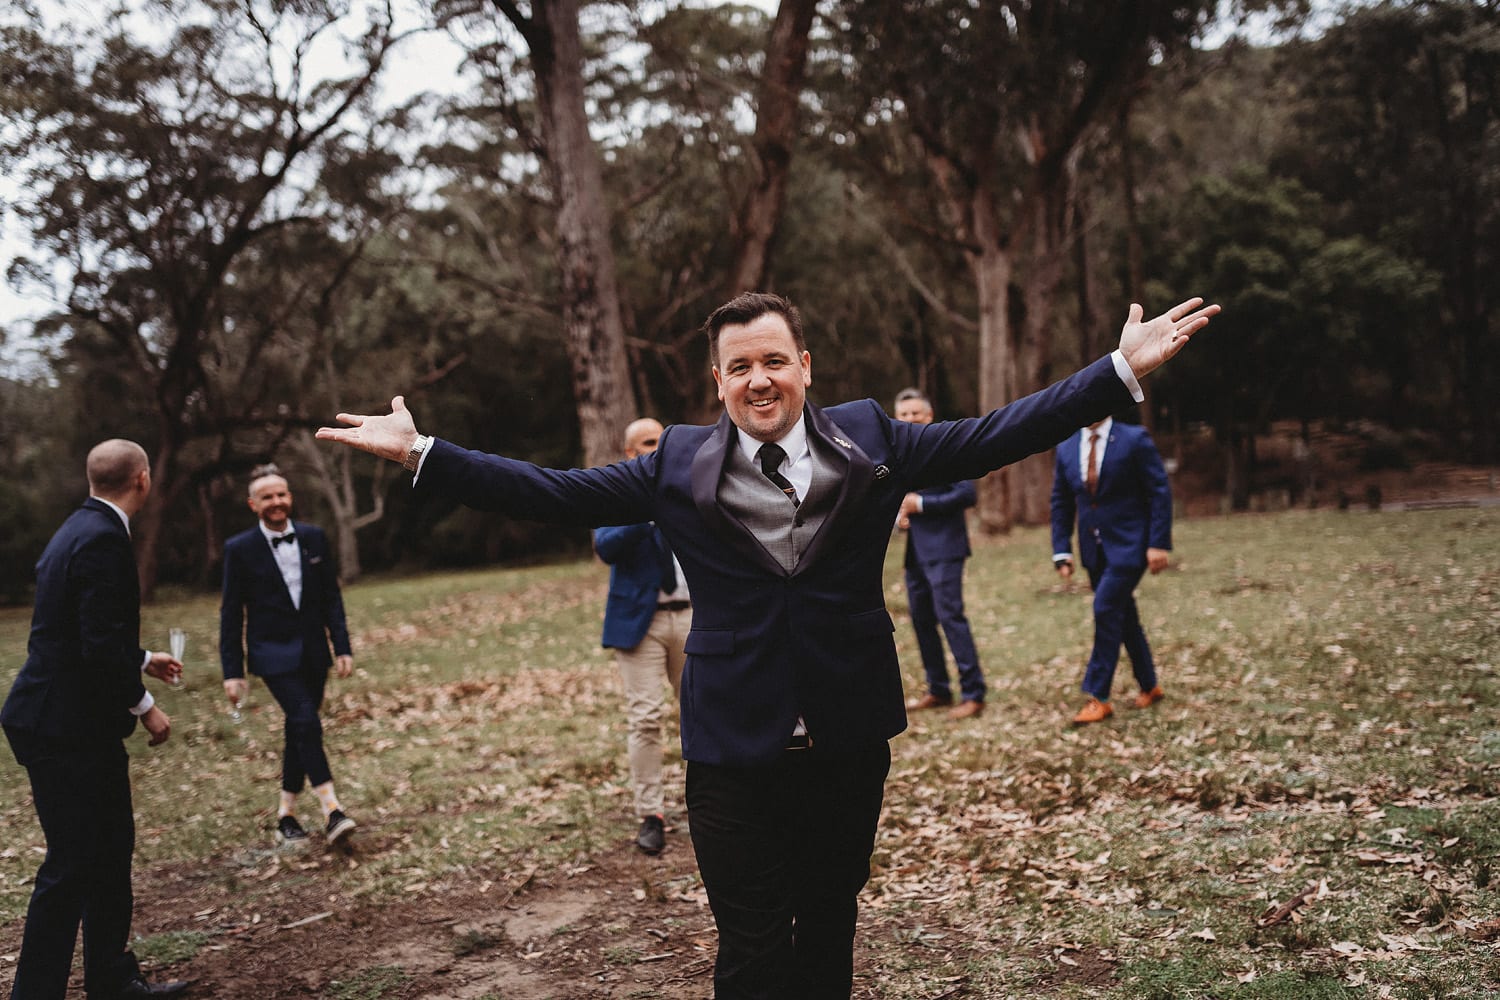 Wedding-photographer-sydney-audley-dance-hall-groom